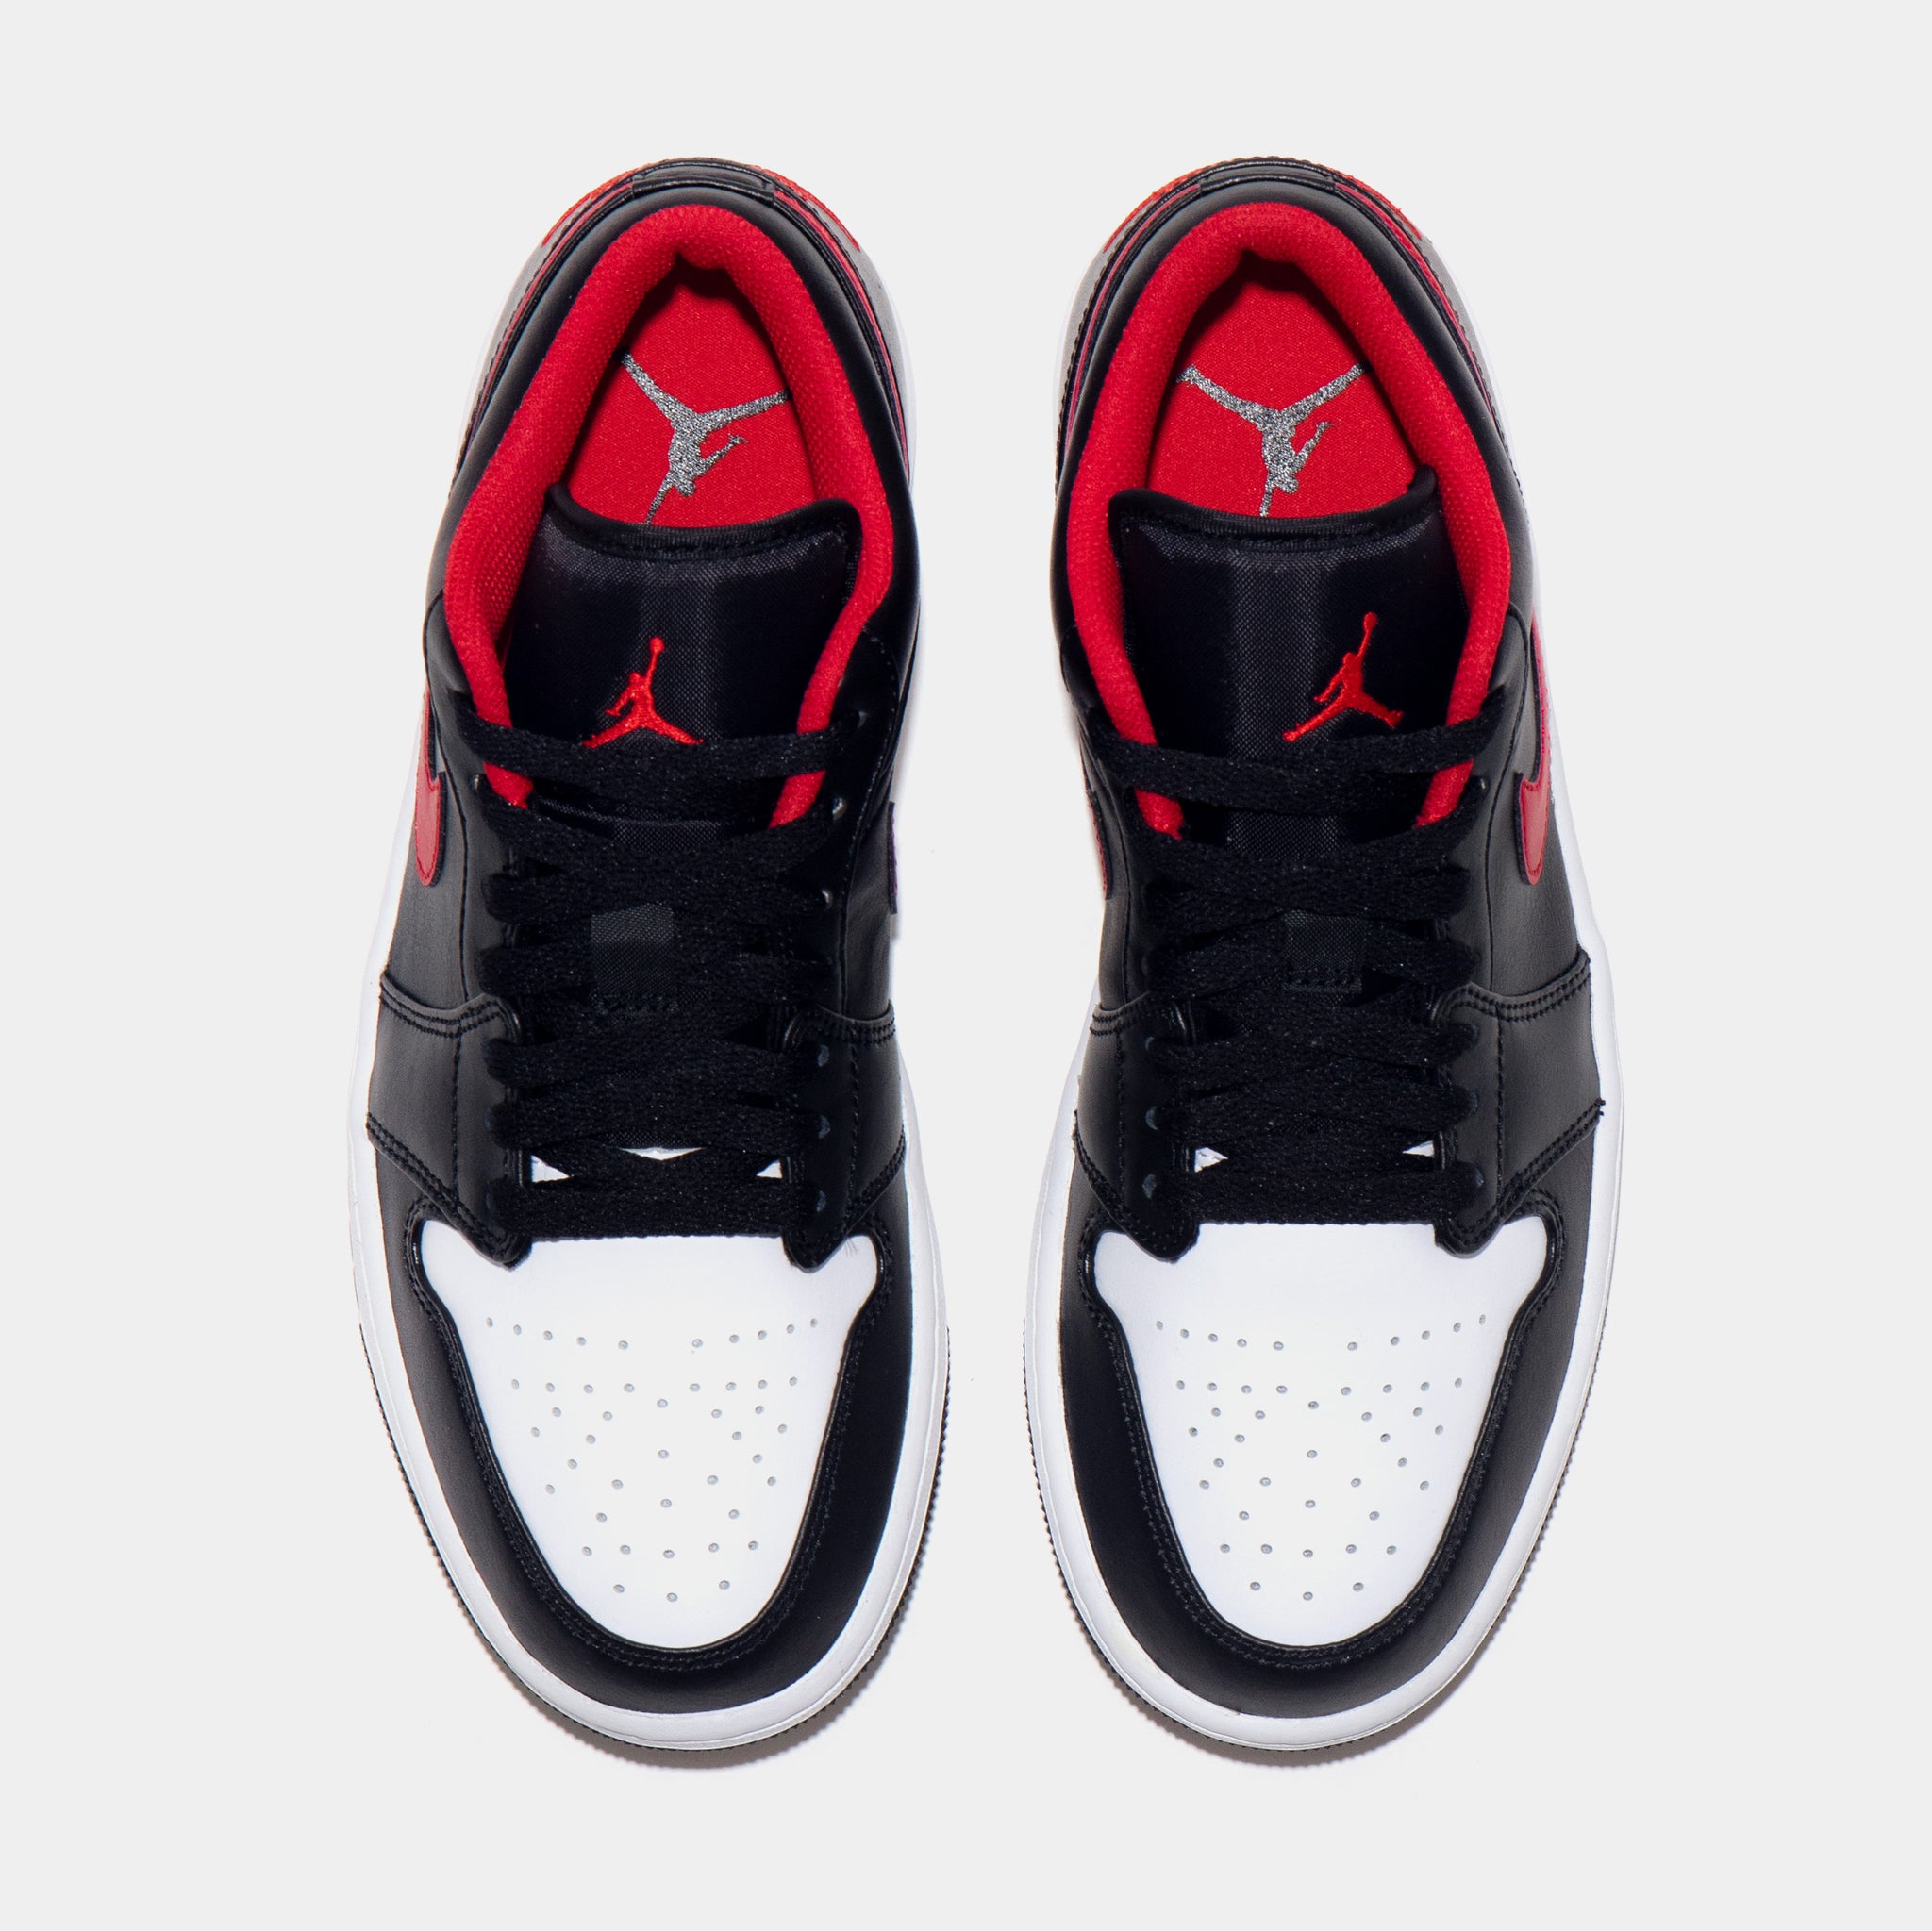 Jordan Air Jordan 1 Retro Low Alternate Bred Toe Mens Lifestyle Shoes Black  553558-066 – Shoe Palace